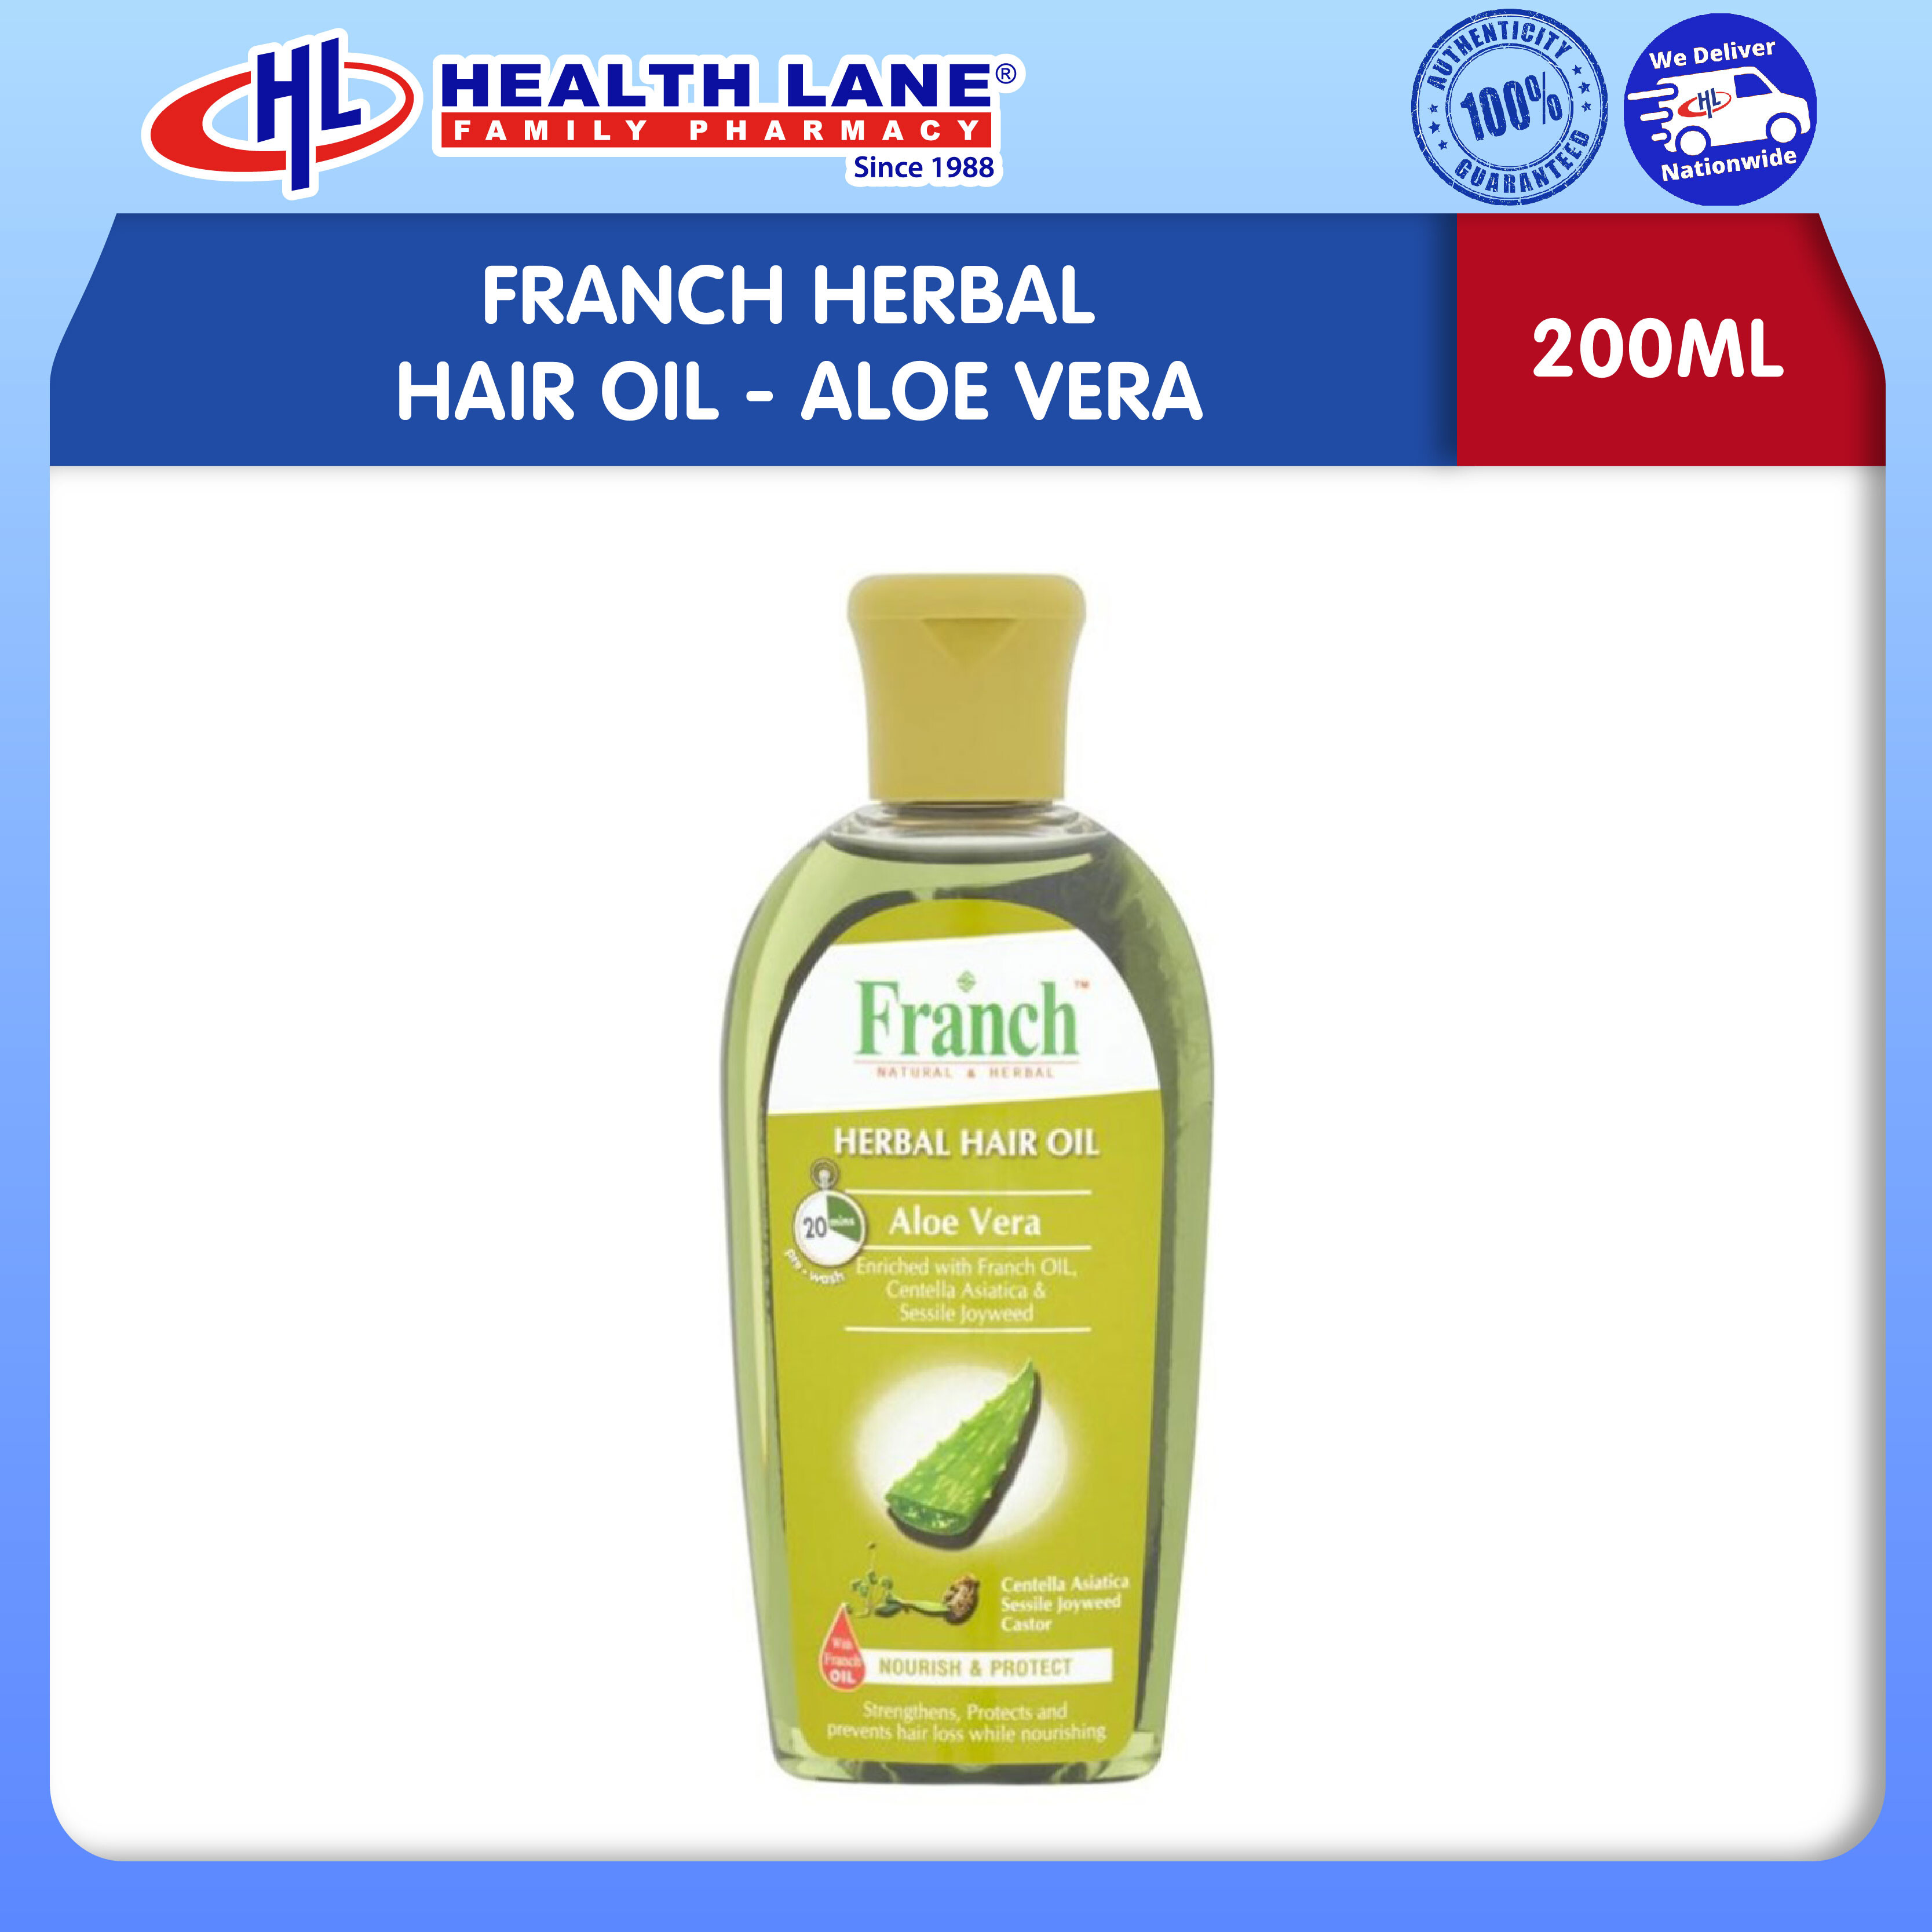 FRANCH HERBAL HAIR OIL ALOE VERA (200ML)